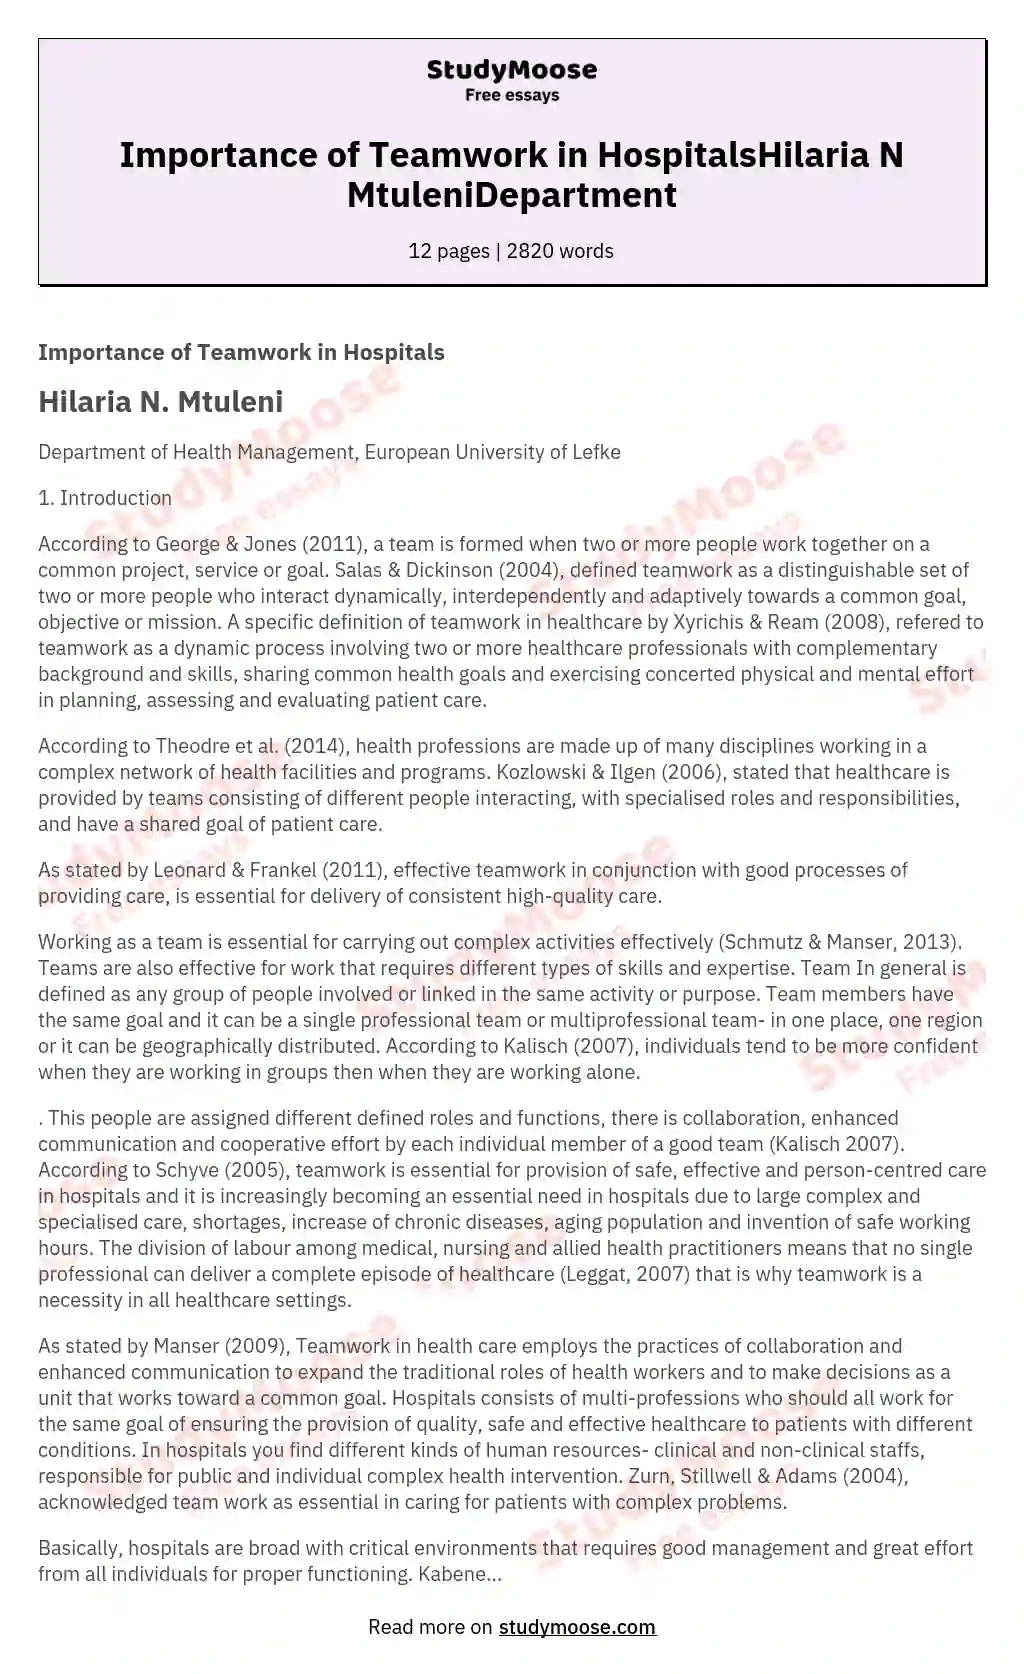 Importance of Teamwork in HospitalsHilaria N MtuleniDepartment essay